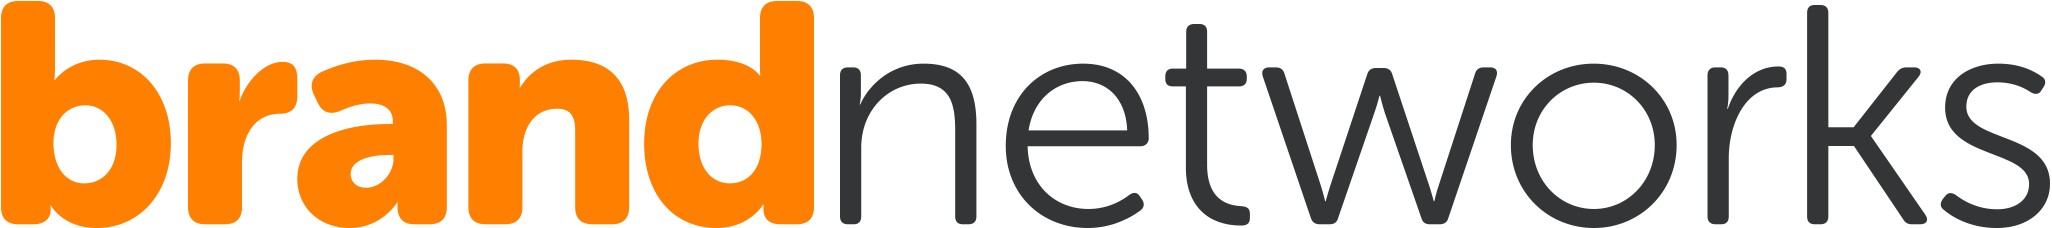 brandNetworks logo